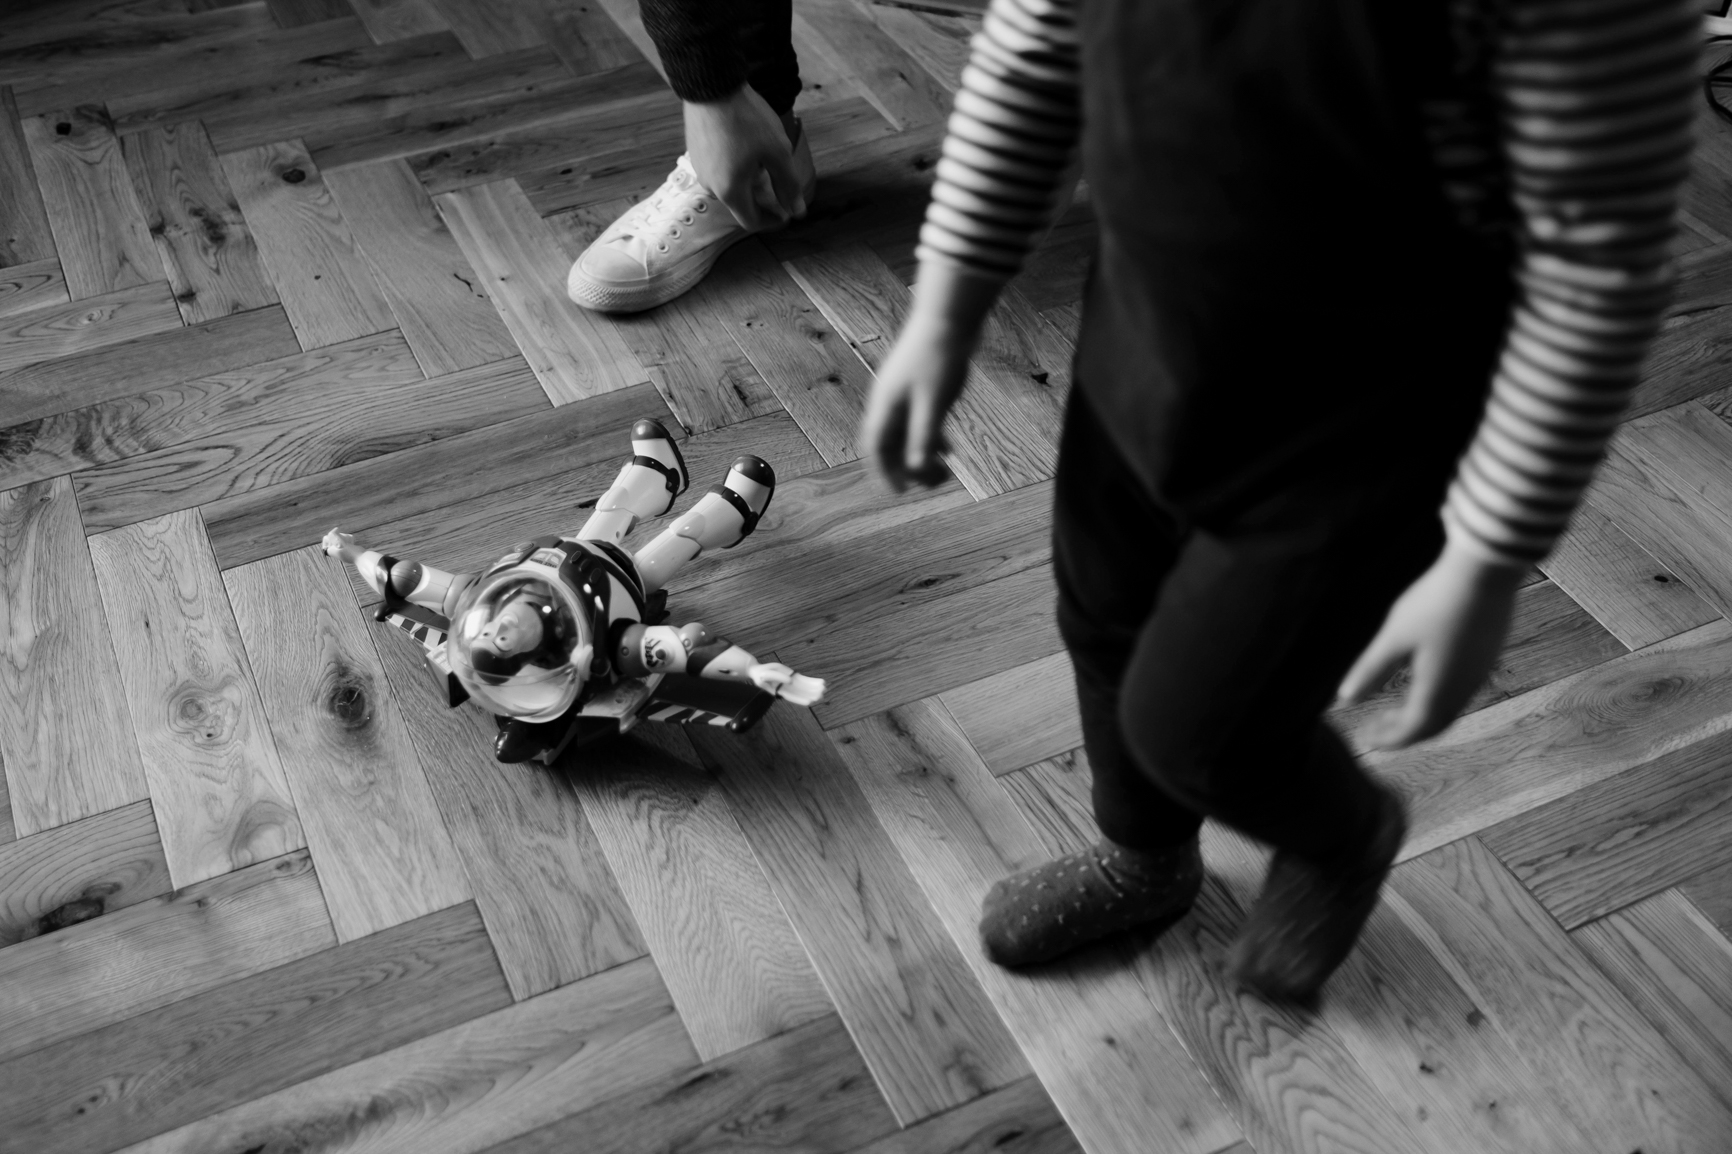  Child walks past toy on the floor. 